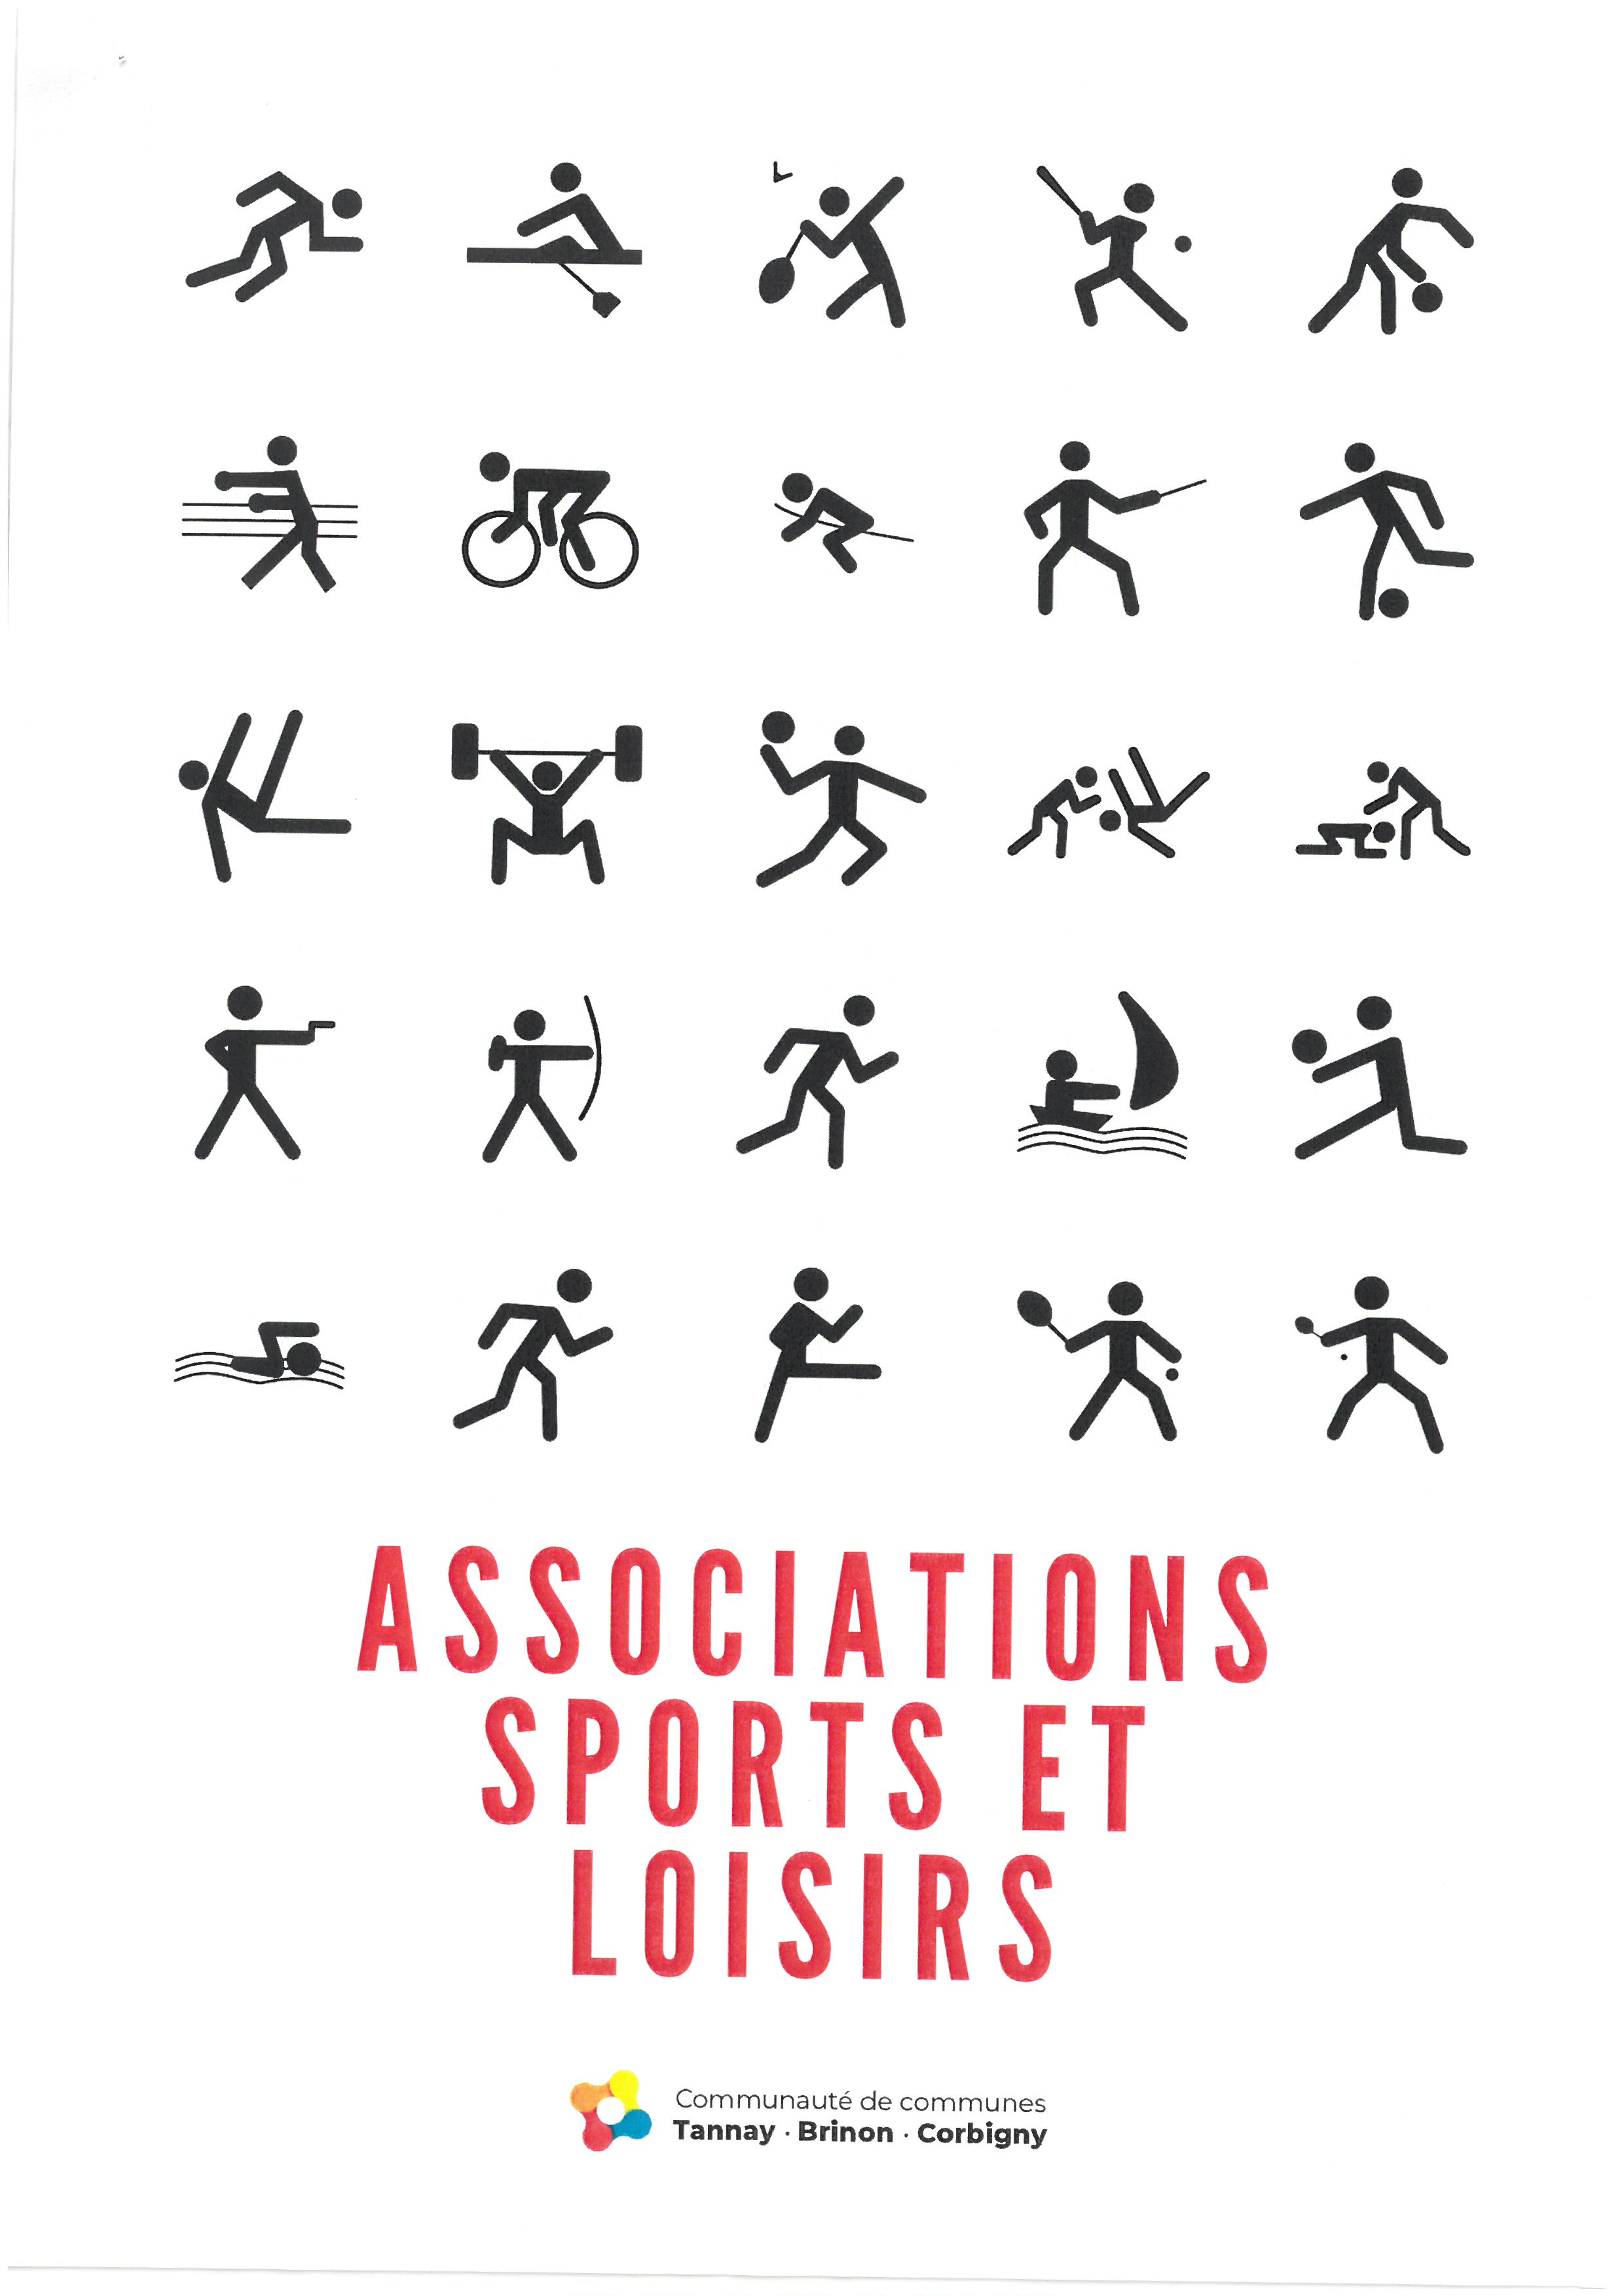 Associations sports et loisirs